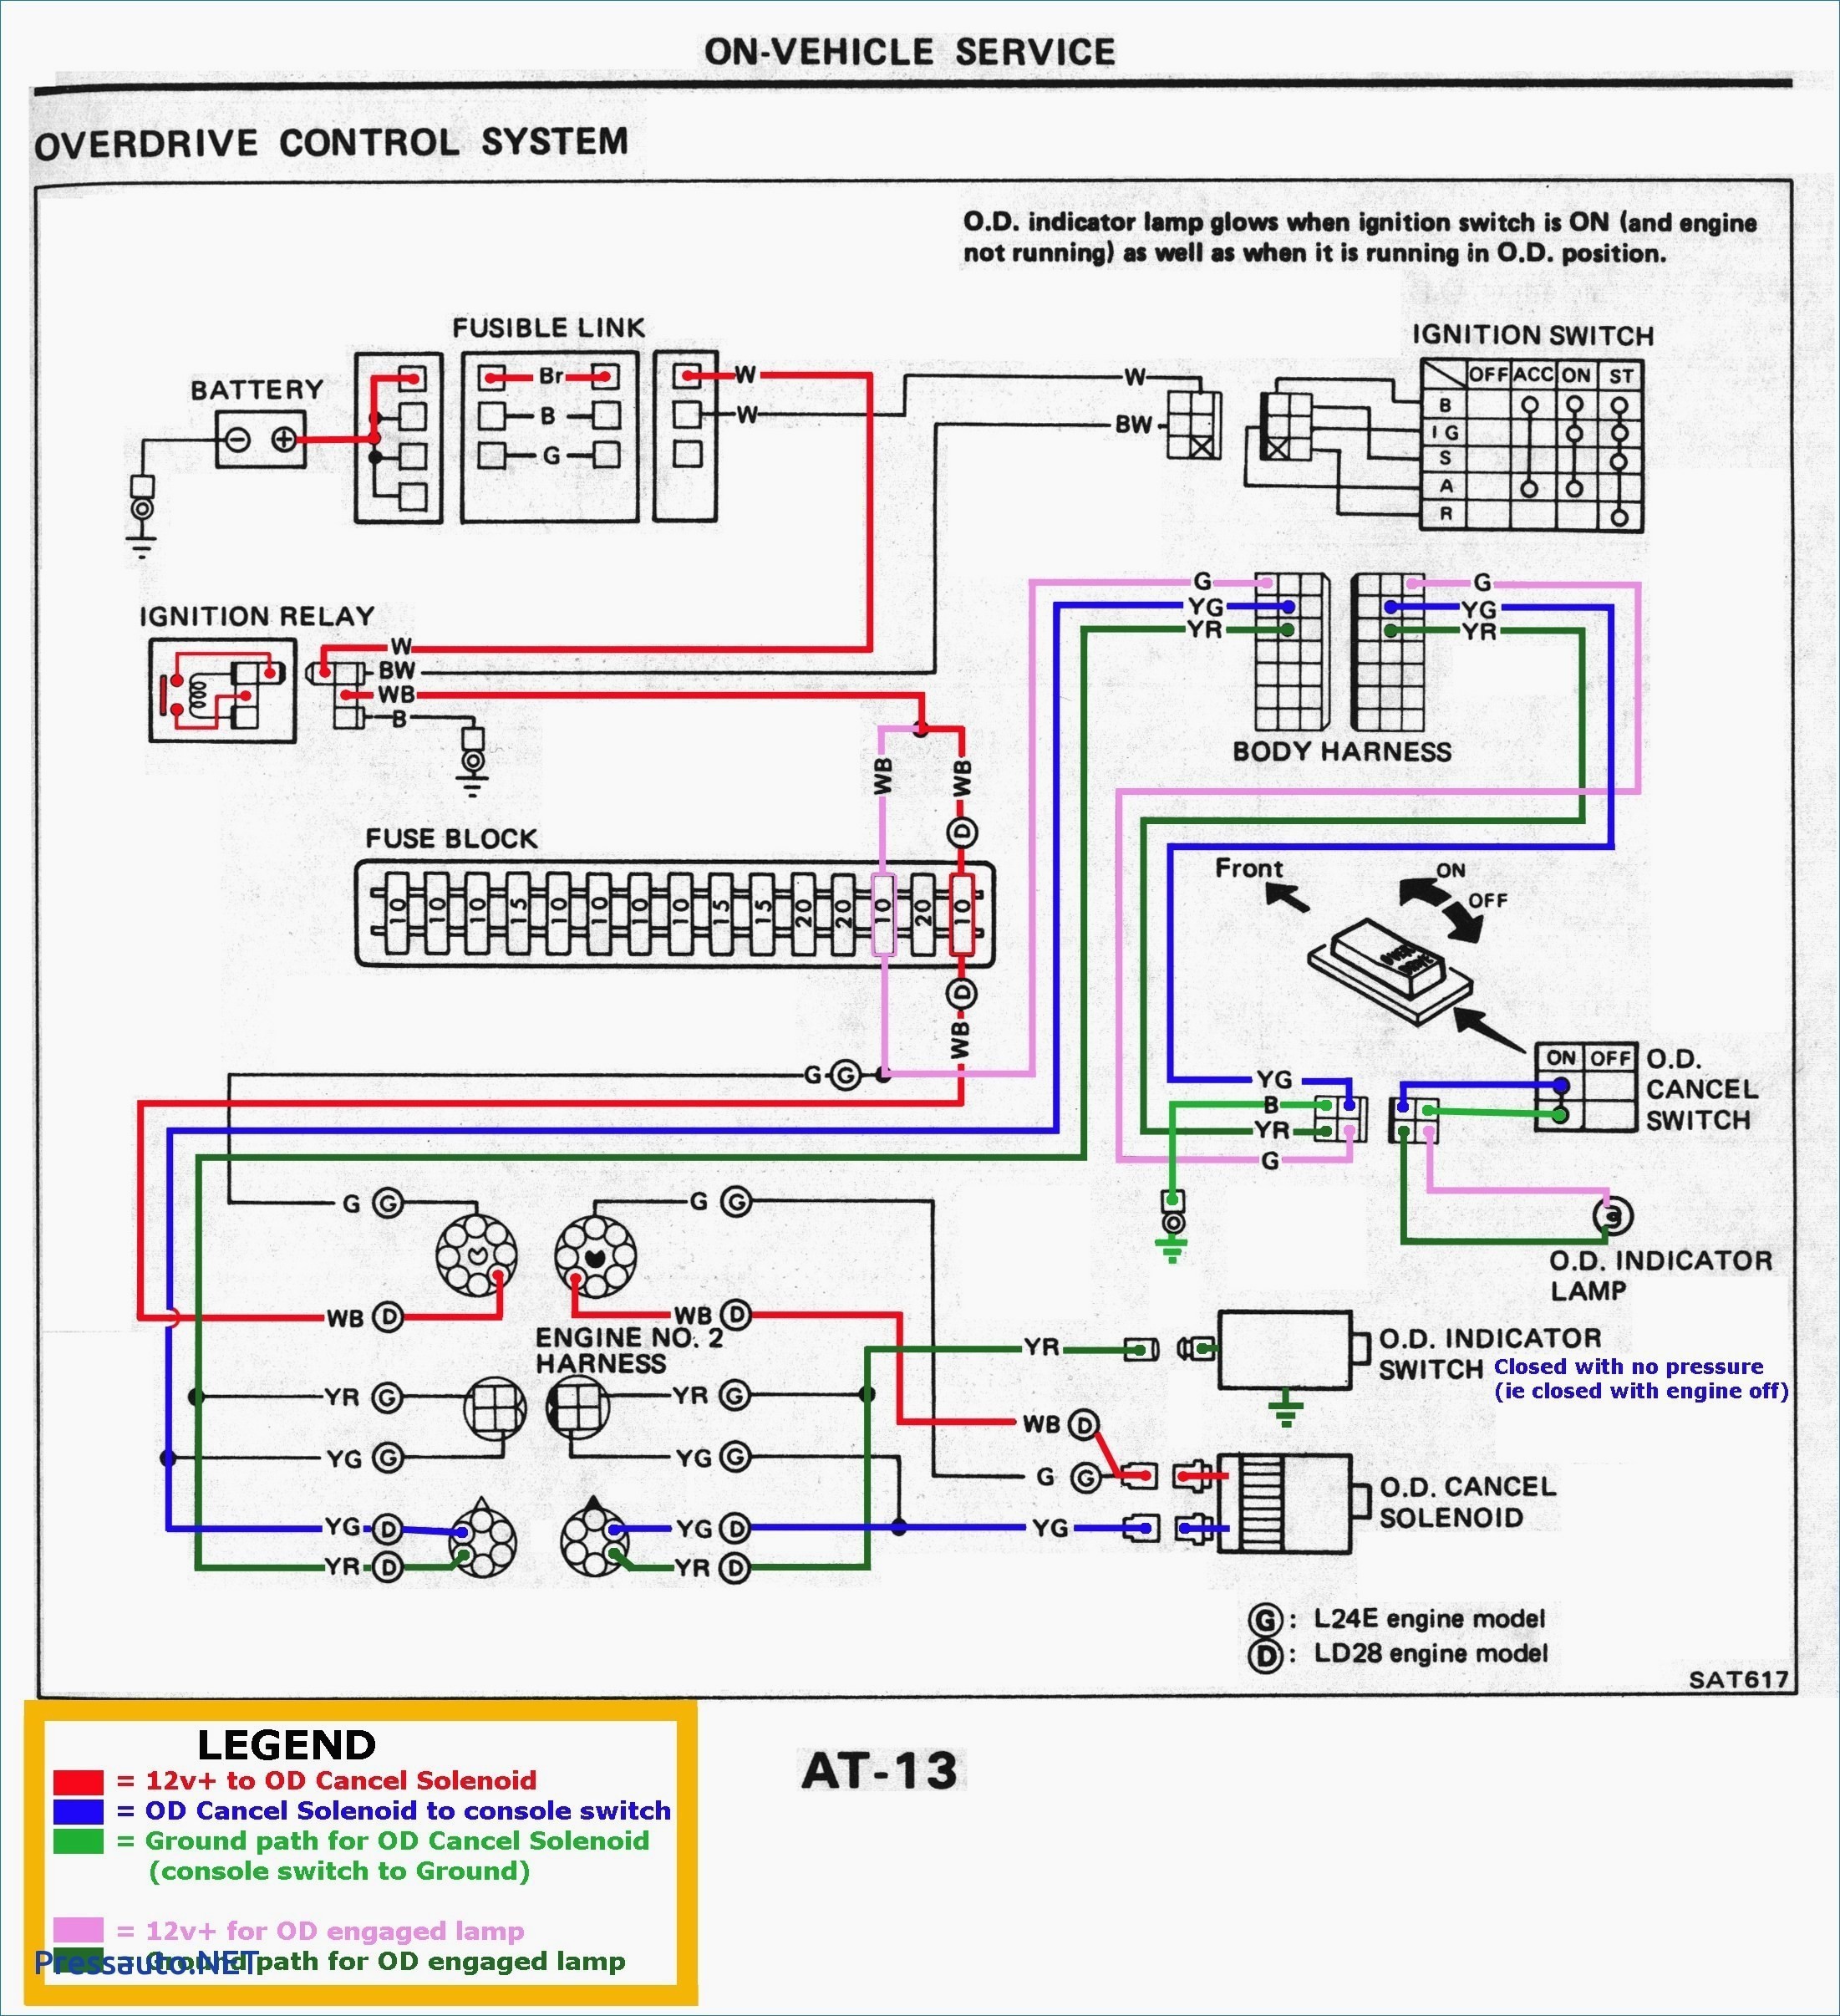 Ac Delco Alternator Wiring Diagram Wiring Diagram Ac Delco Alternator Best Simple Wiring Diagram Of Ac Delco Alternator Wiring Diagram